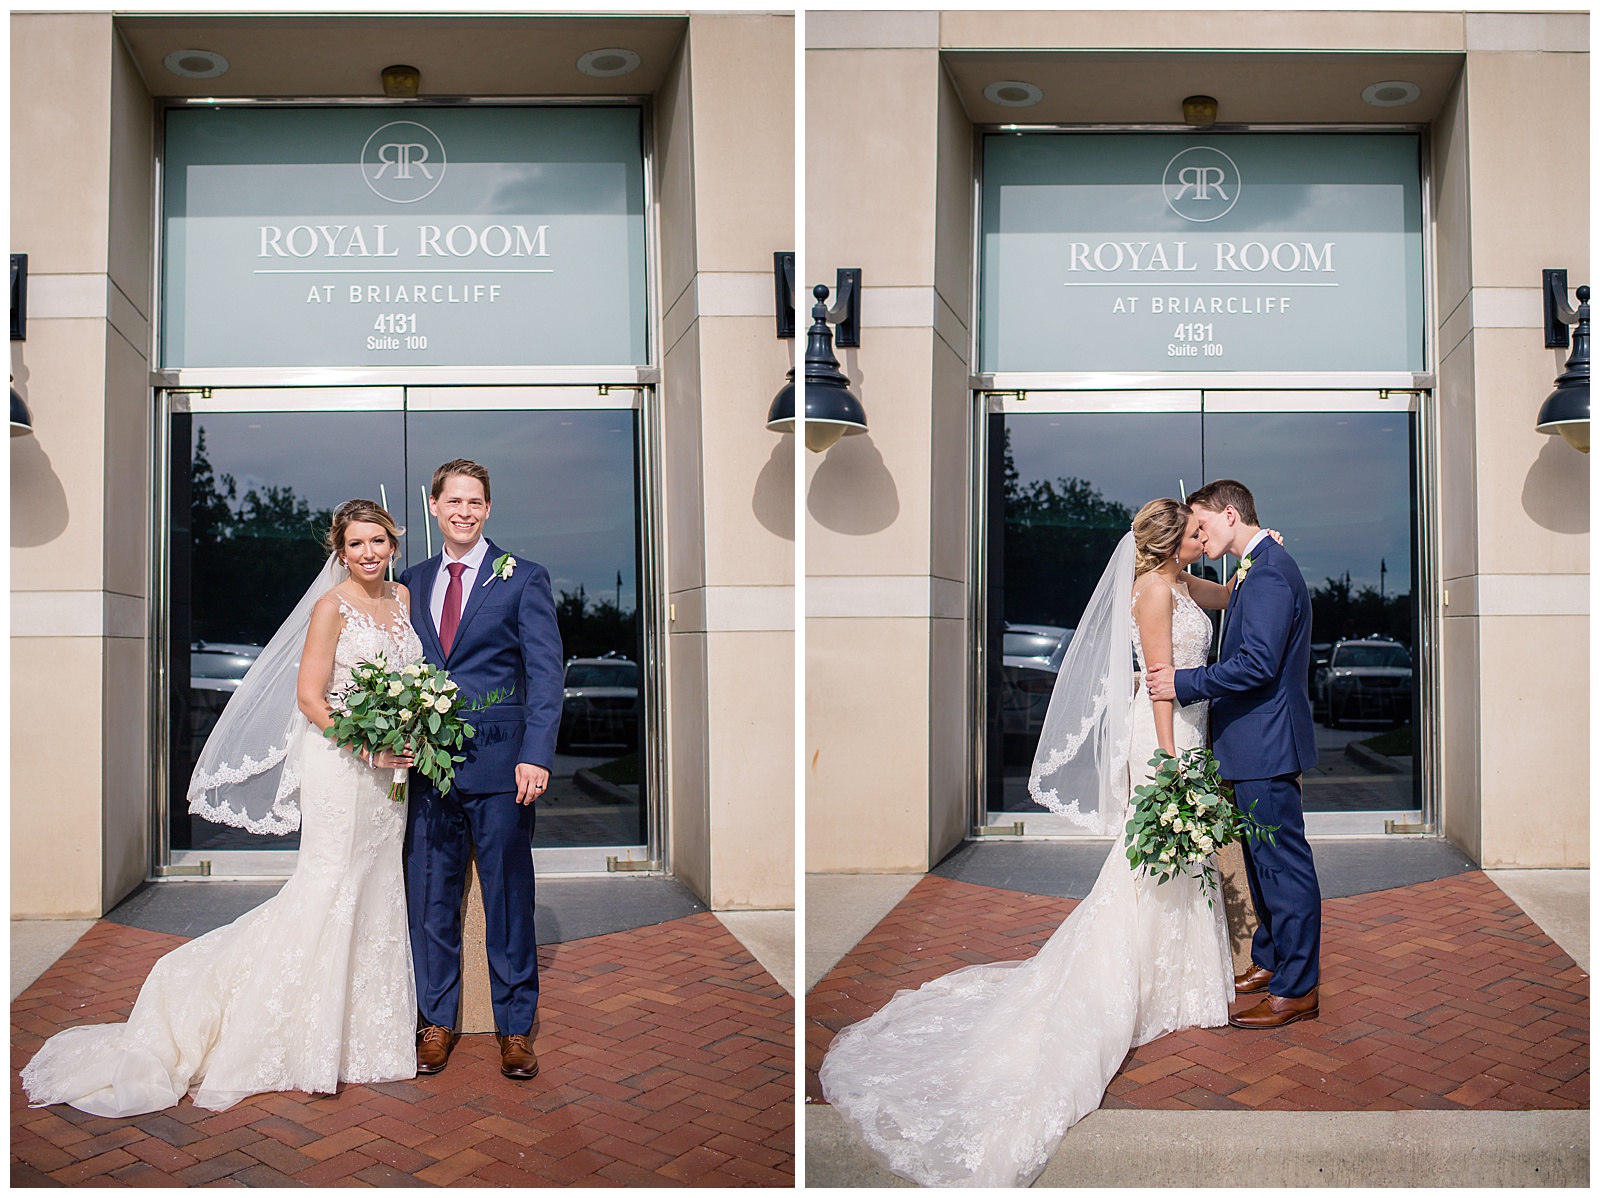 Wedding photography and videography at the Royal Room at Briarcliff by Kansas City wedding photographers Wisdom-Watson Weddings.